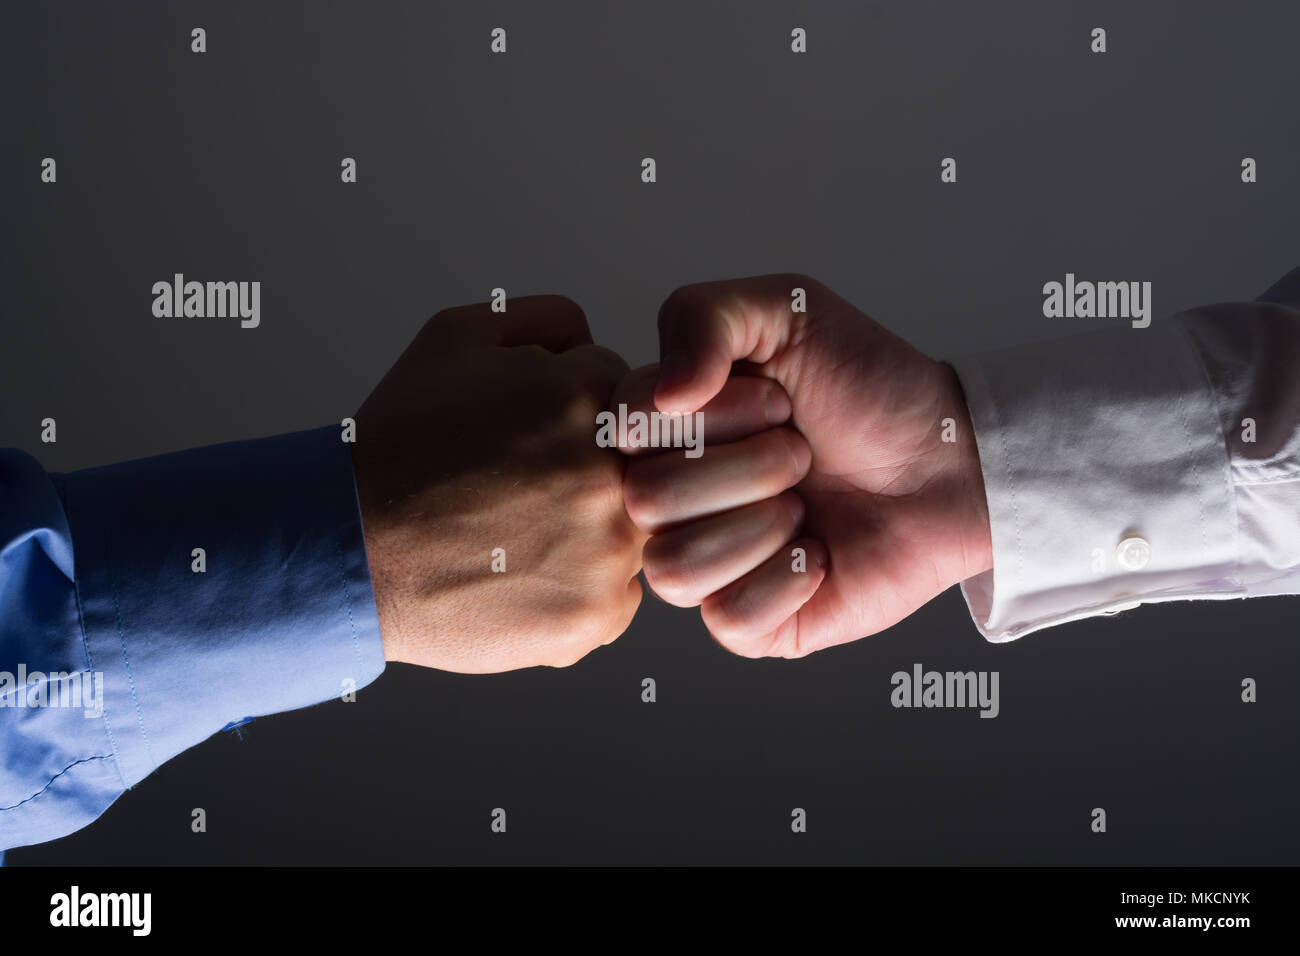 Side view with light source from below of fist bump handshake between businessmen over dark gray background Stock Photo